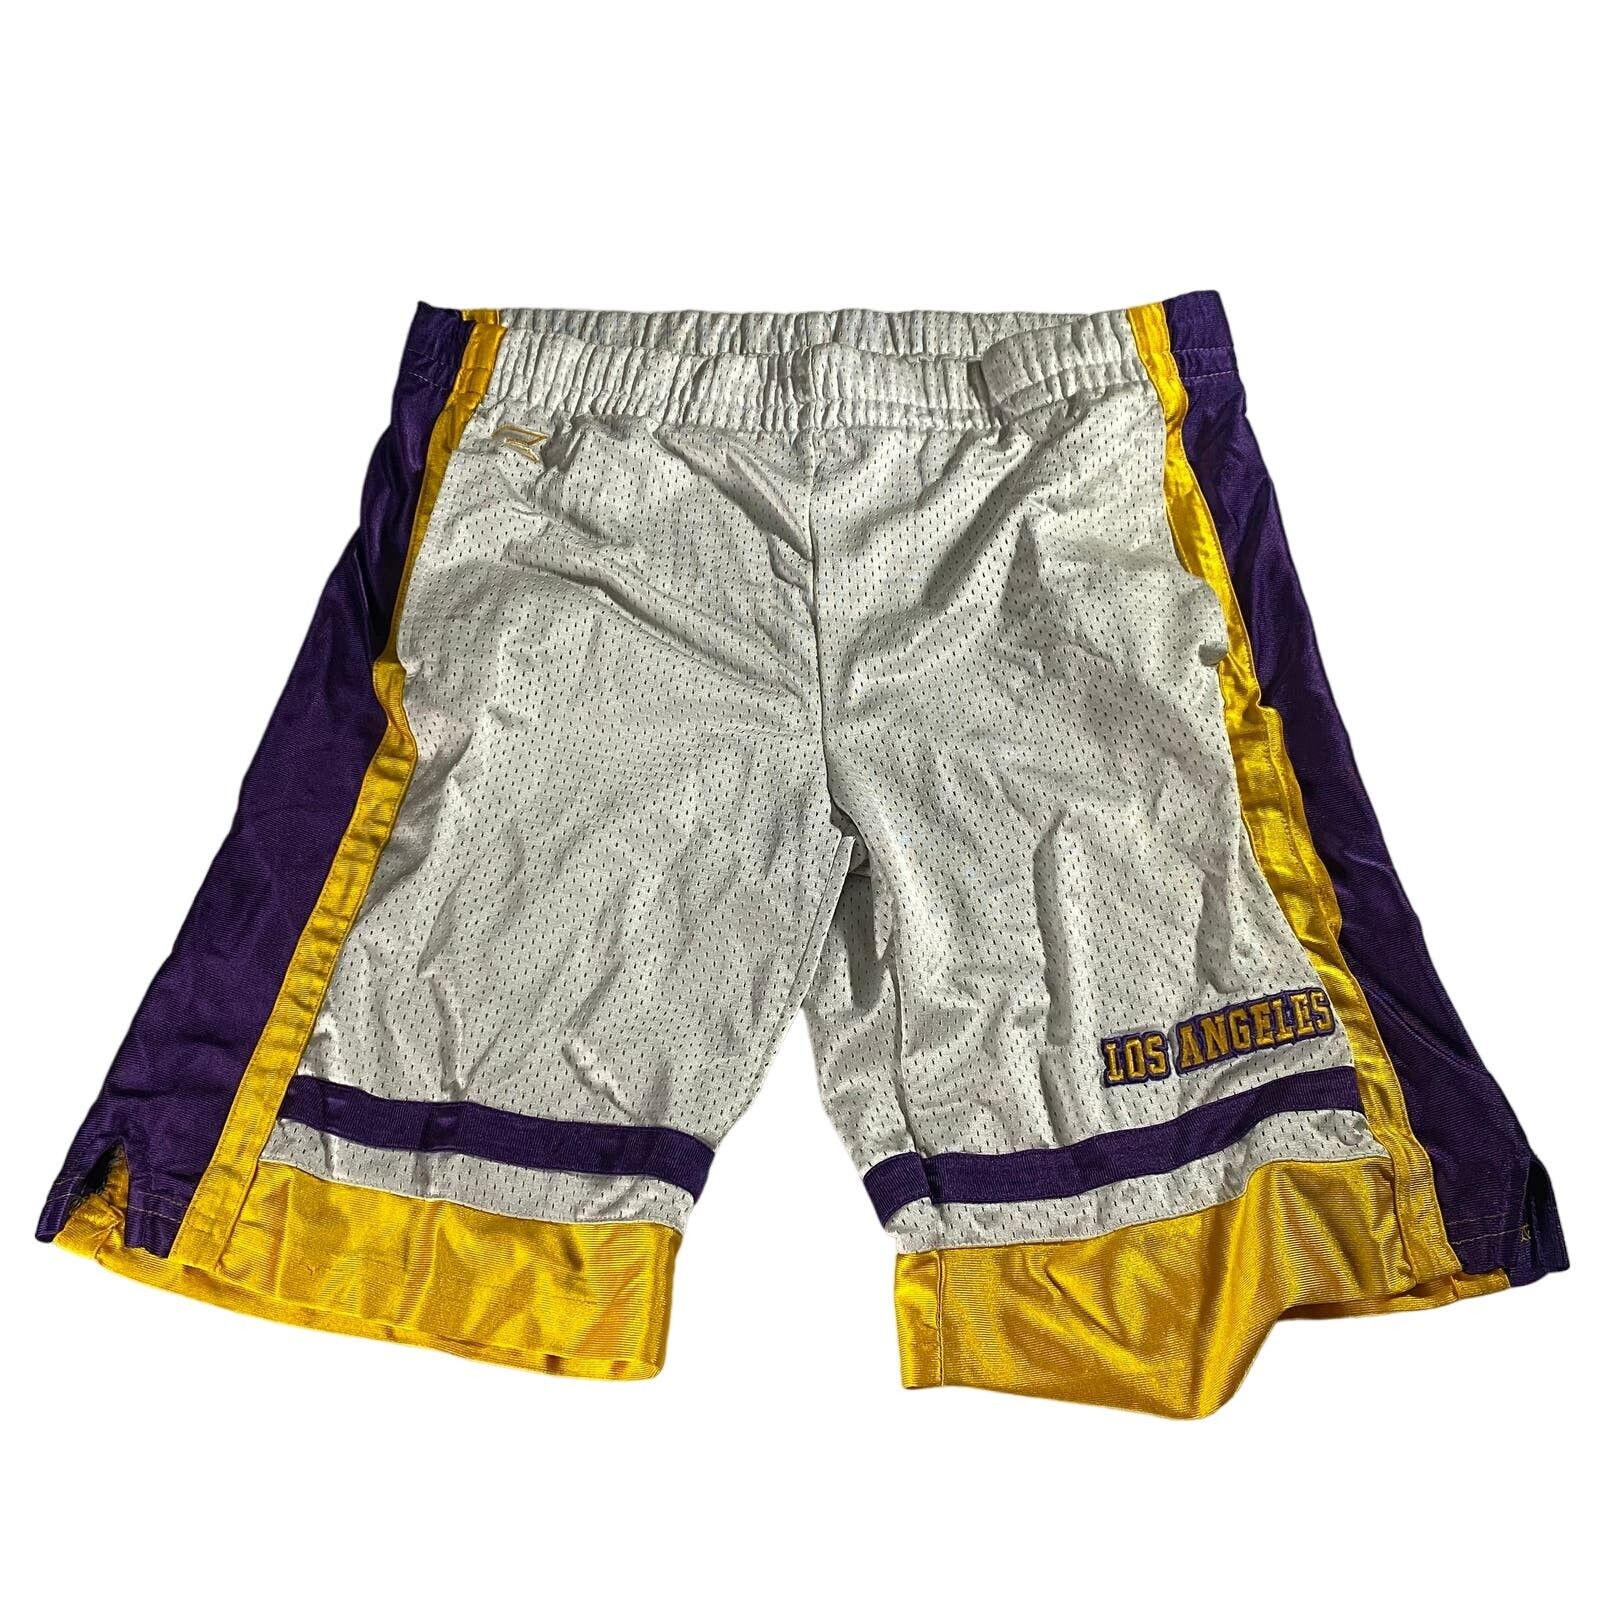 Vintage VTG 90s Colosseum Athletics Lakers Basketball Shorts Men's S Size US 34 / EU 50 - 1 Preview